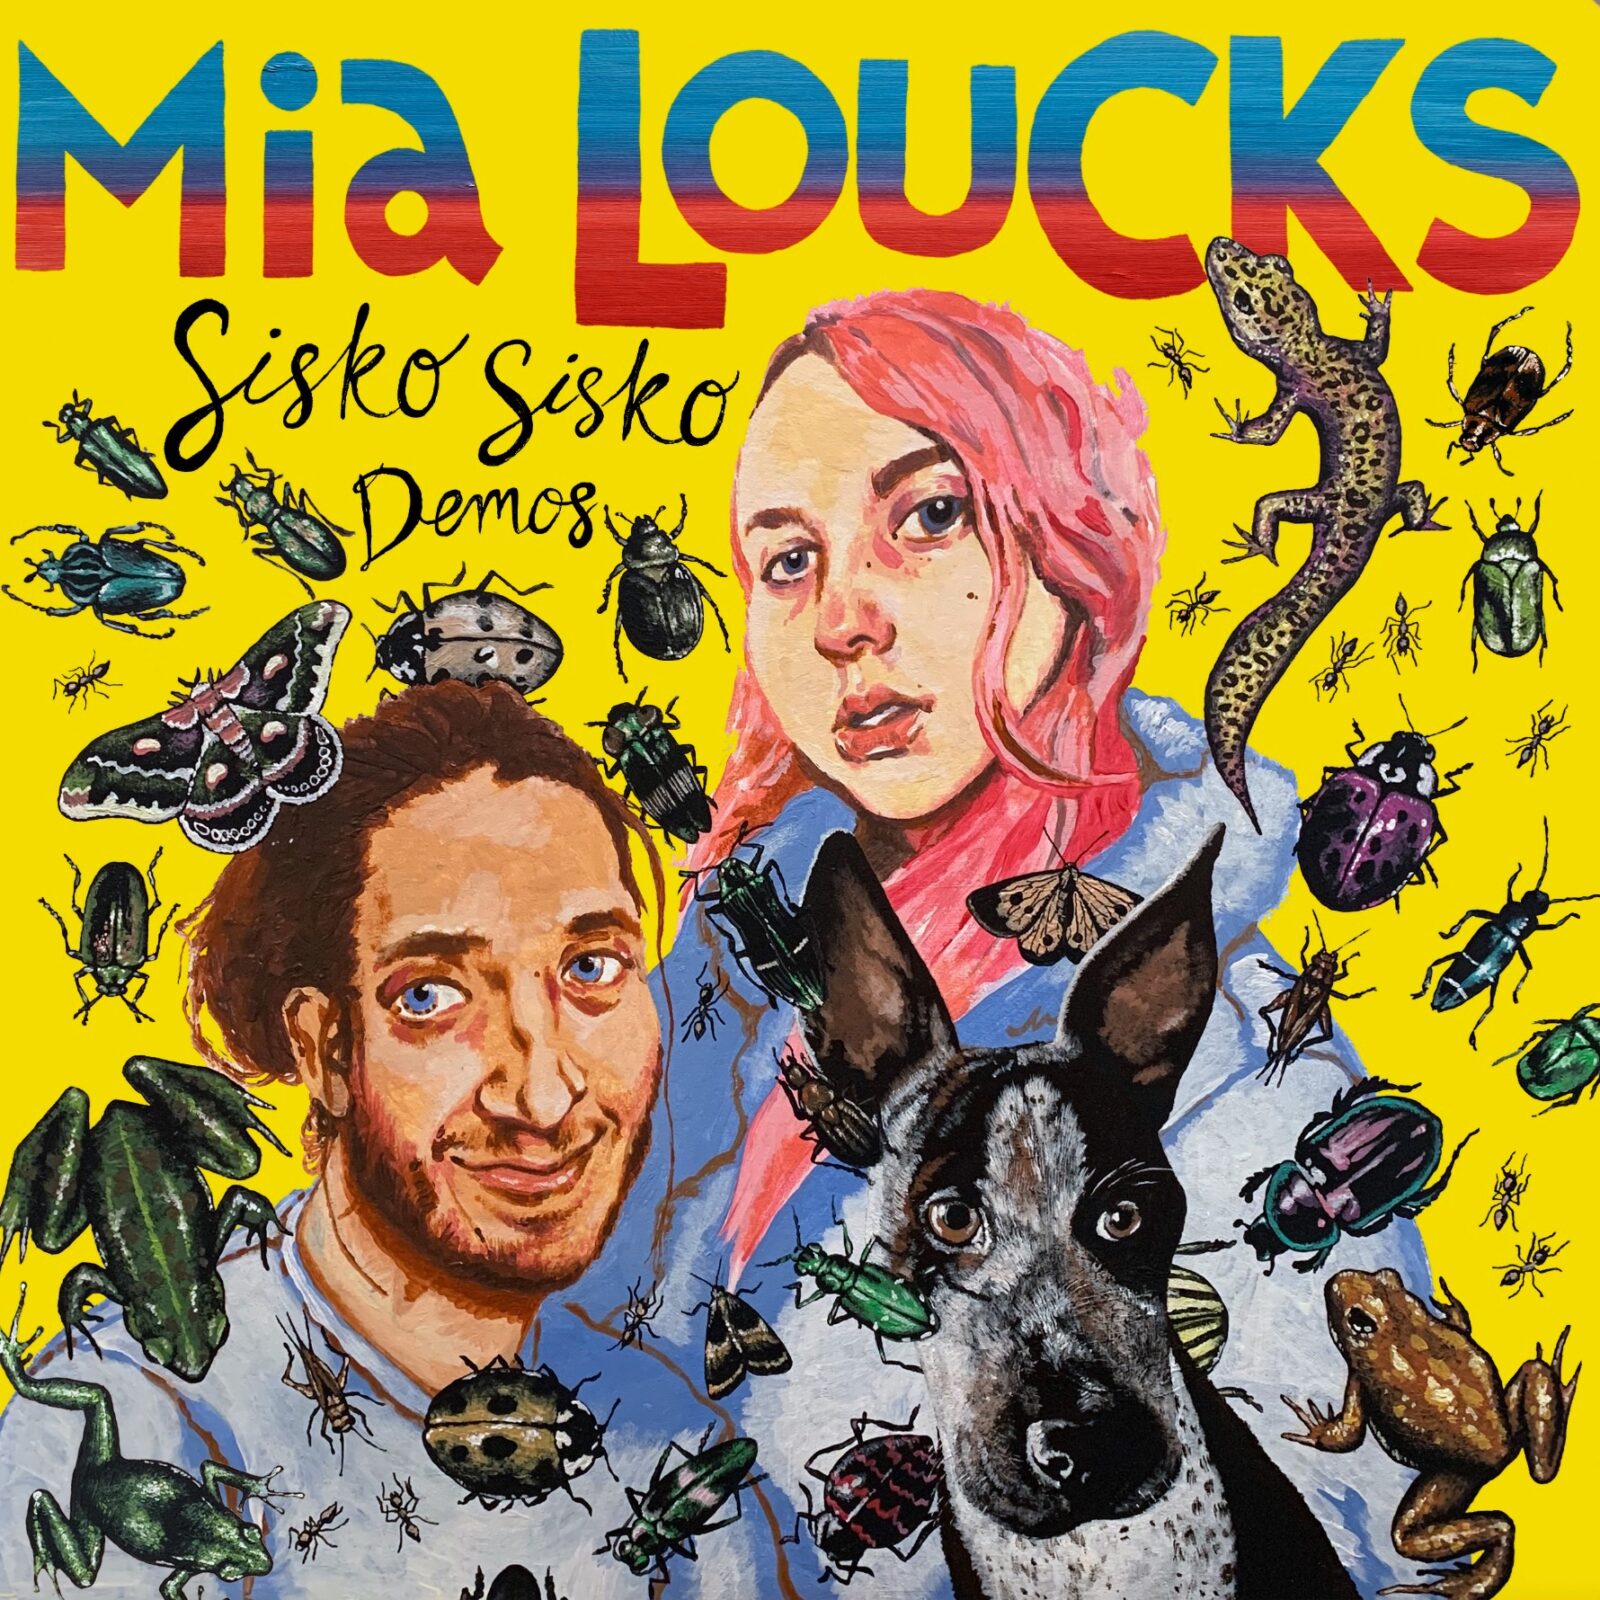 Introducing: Mia Loucks – Sisko Sisko Demos + 3 Qs